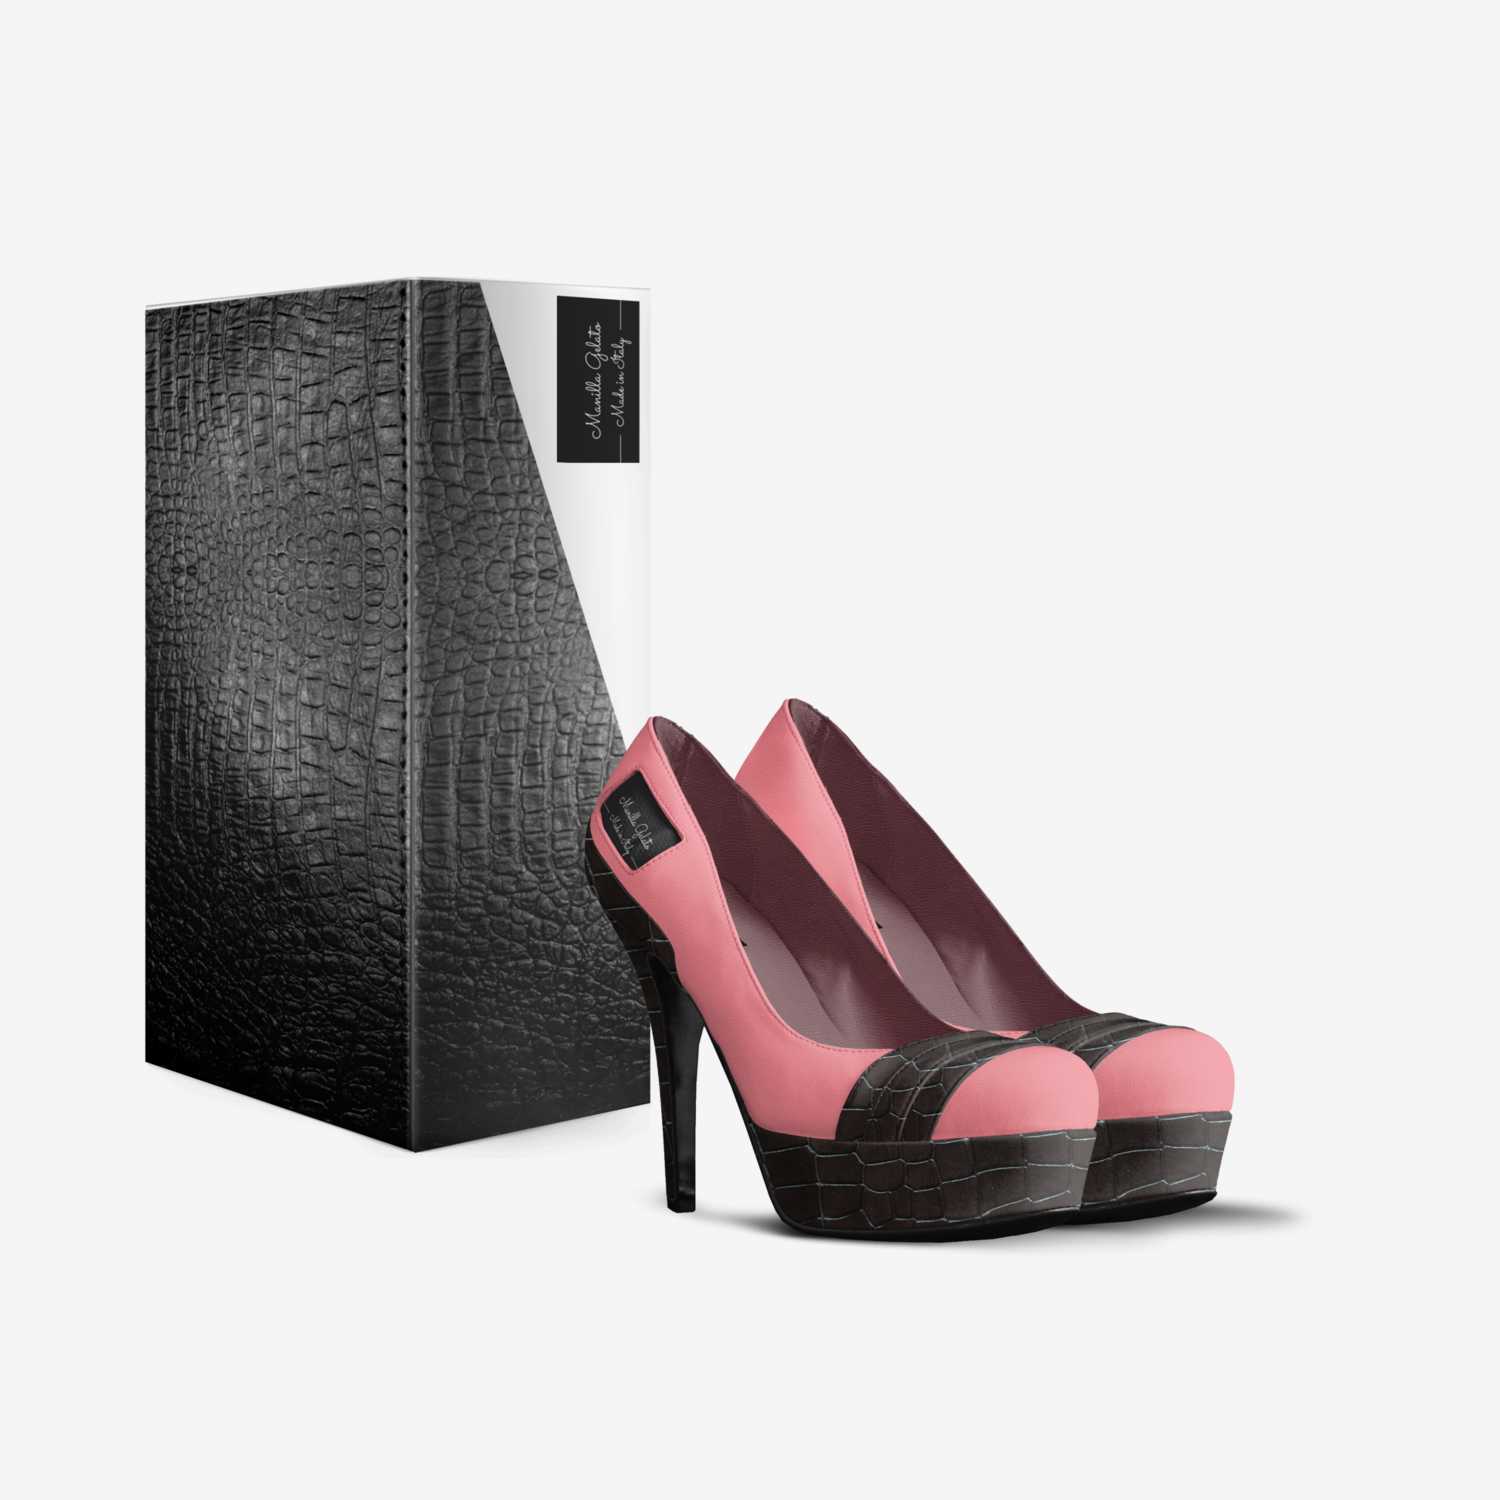 Manilla Gelato custom made in Italy shoes by Amanda Magistro | Box view